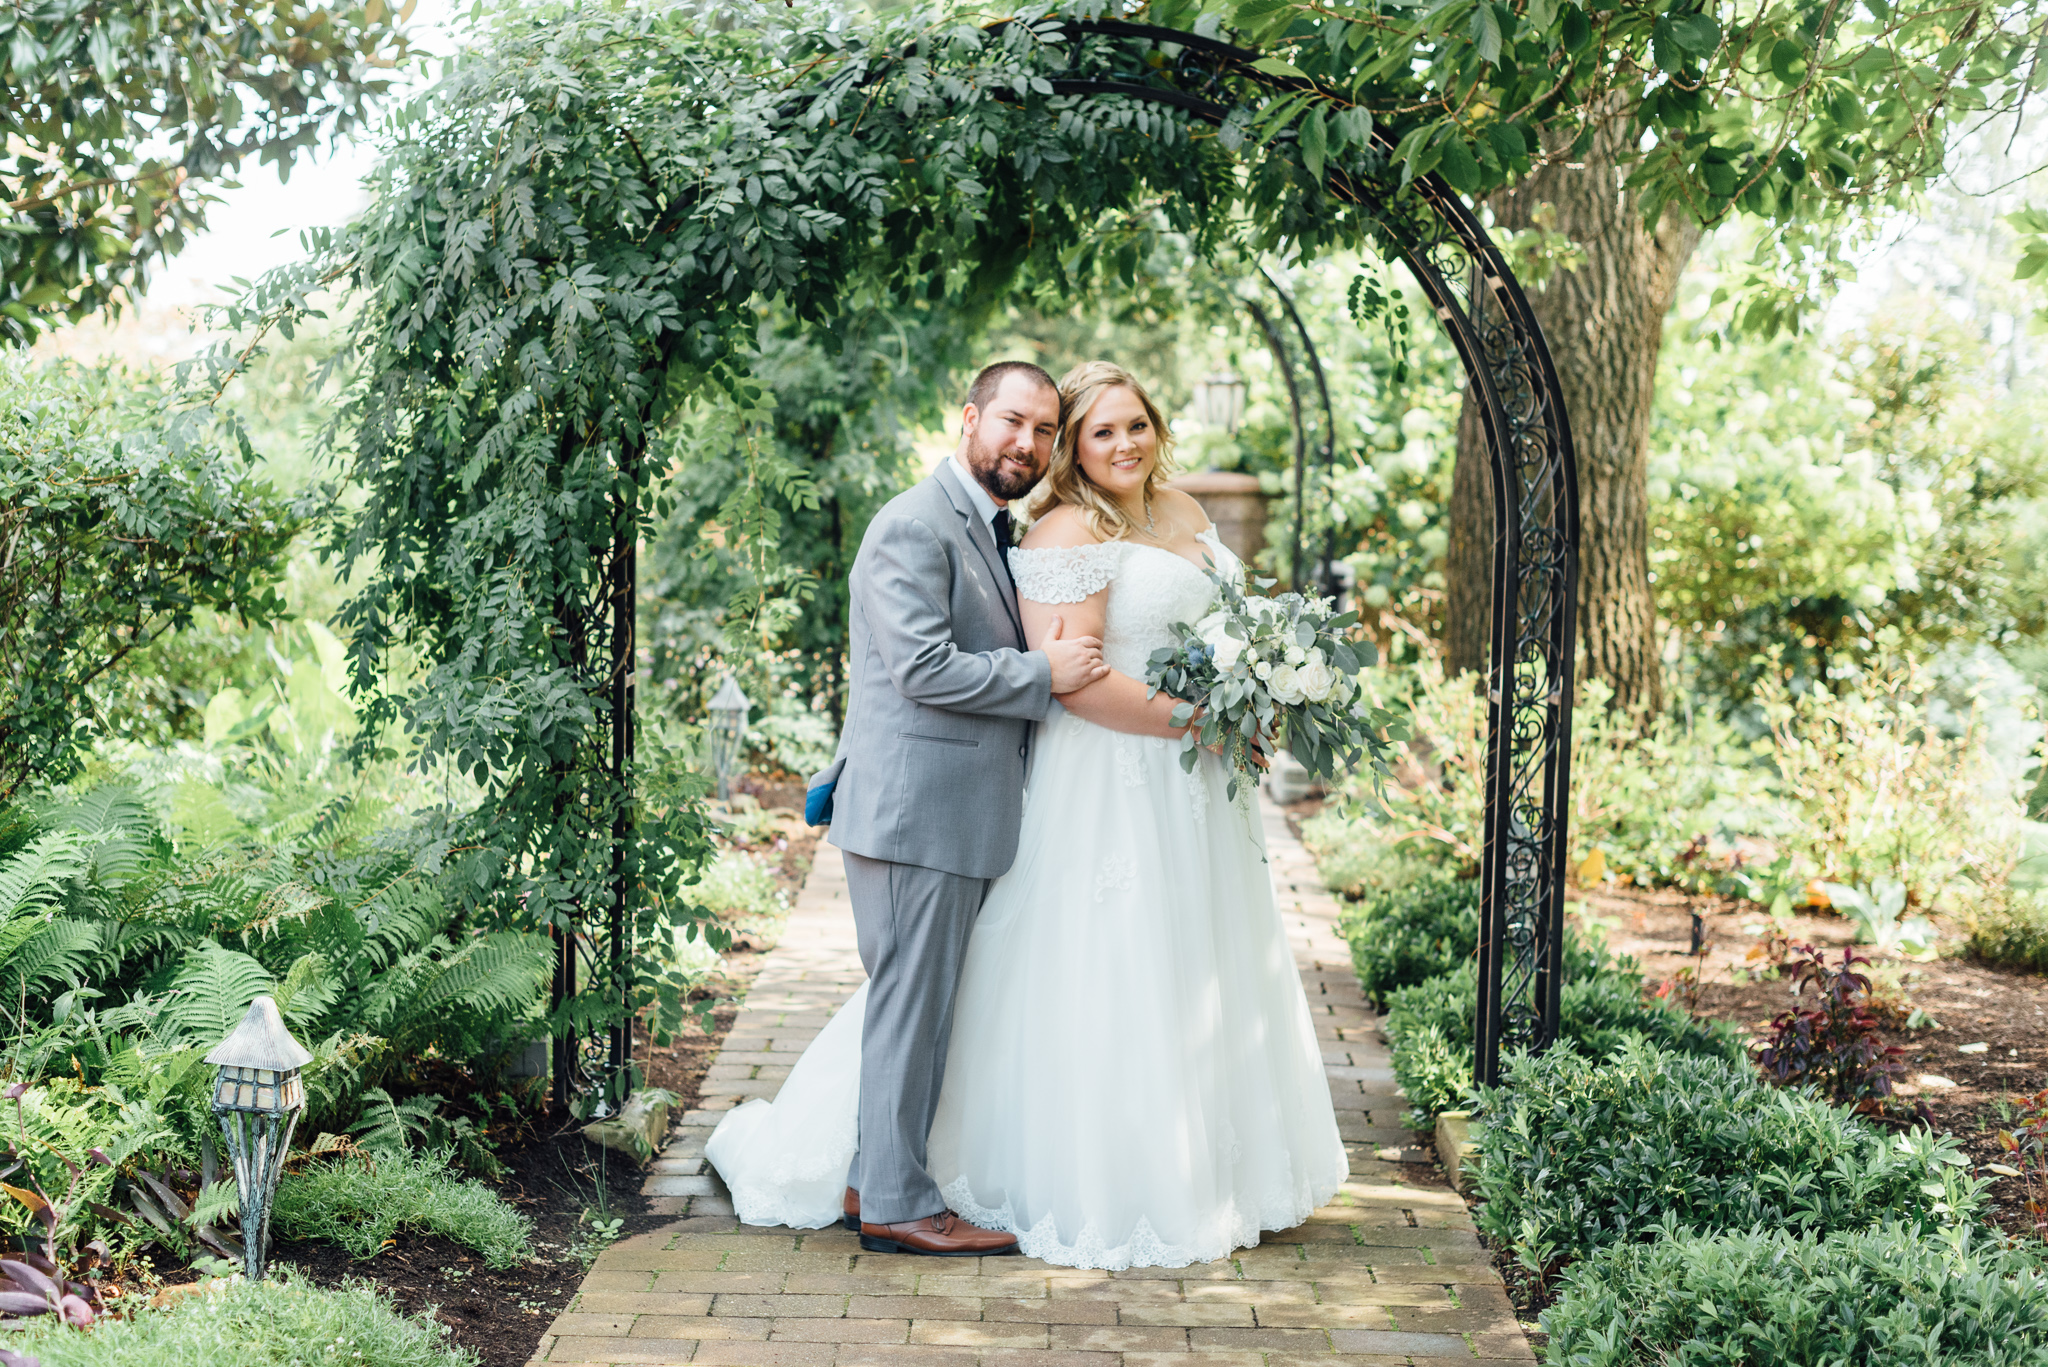 Sam + Brandon - Penn Oaks Wedding - Maryland Wedding Photographer - Alison Dunn Photography photo